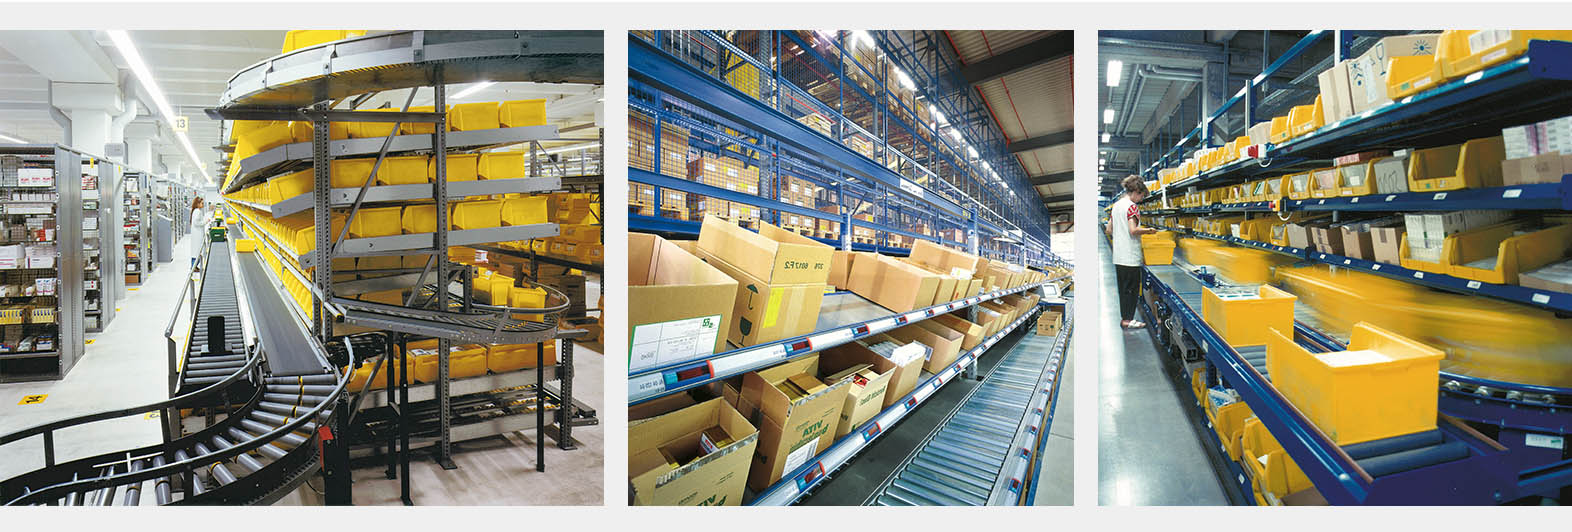 Warehouses with Carton Flow Shelving Systems. Made in USA. SSI Schaefer. www.schaefershelving.com